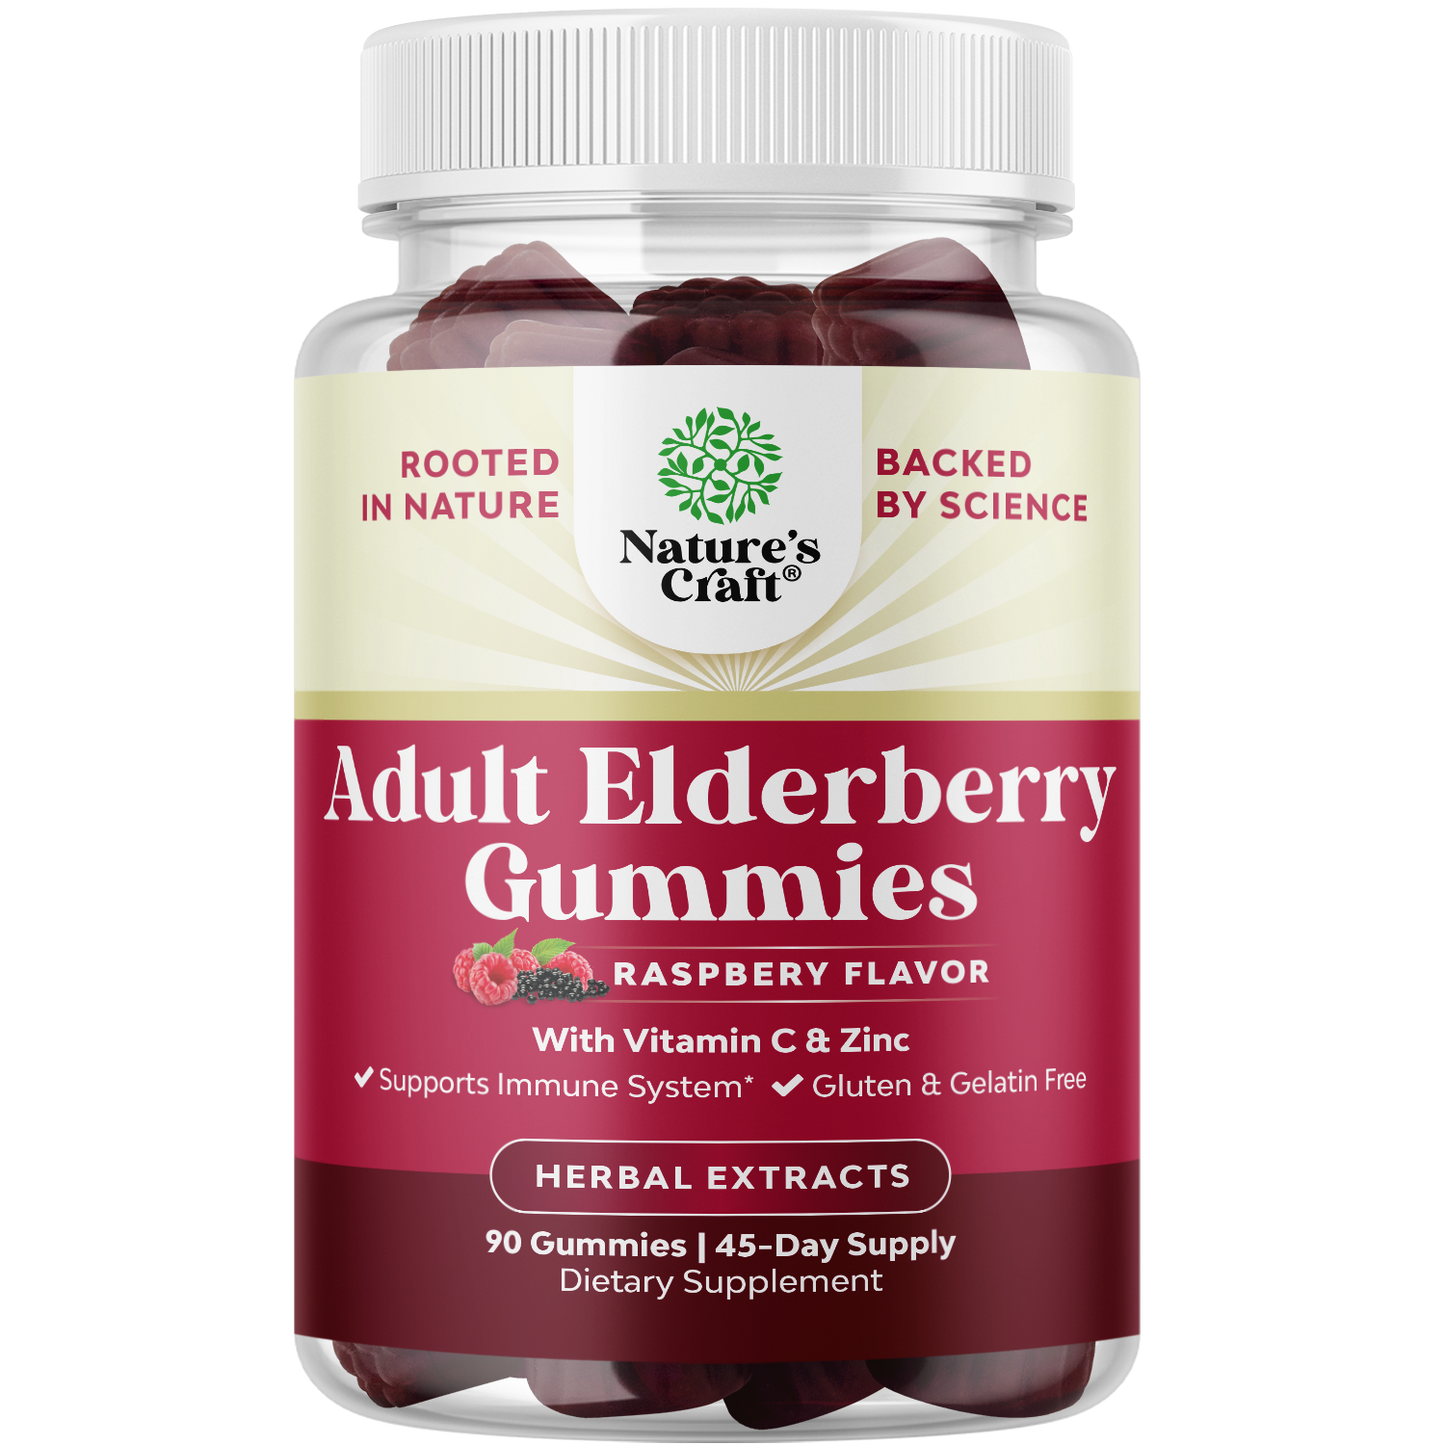 Adult Elderberry Gummies - 90 Gummies